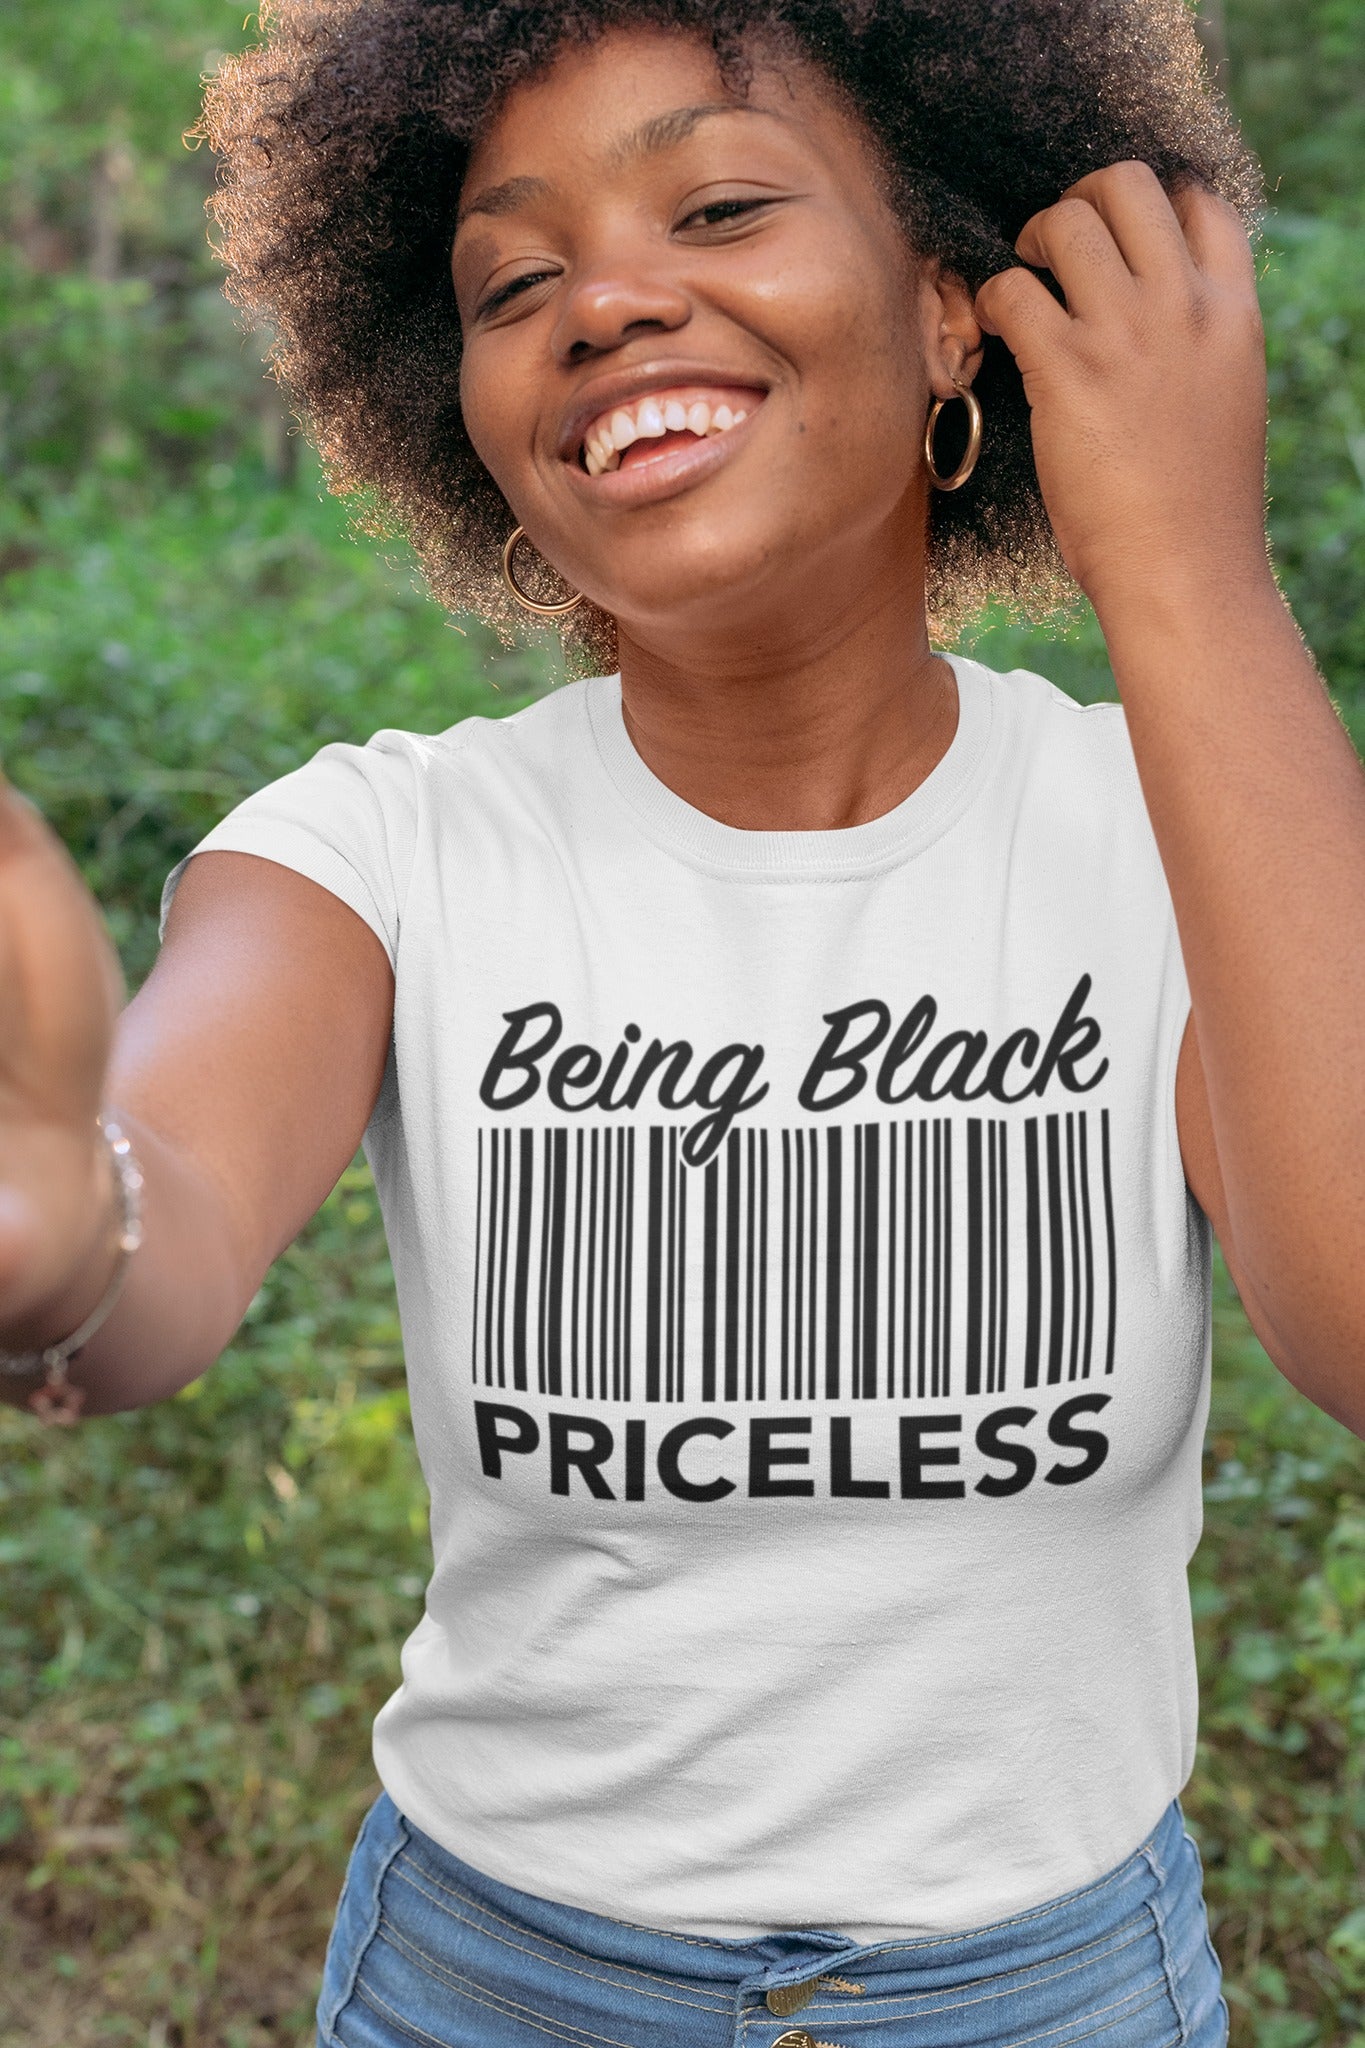 Being Black Priceless